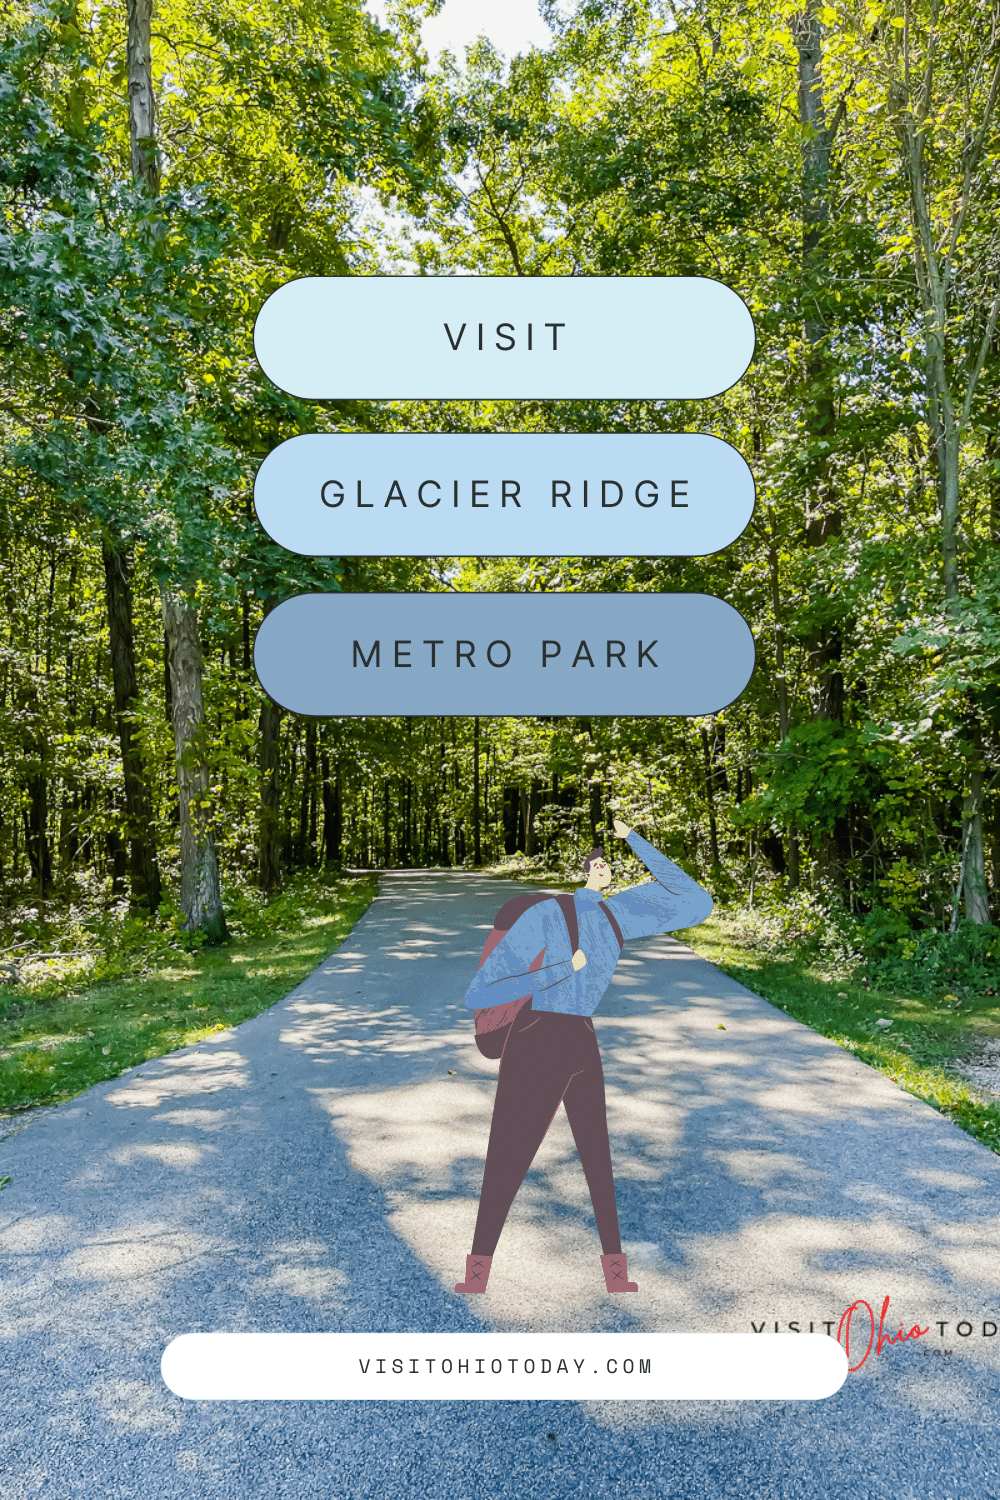 Glacier Ridge Metro Park is located in Plain City, Ohio, just outside of Dublin. Glacier ridge has 1037 acres that make up this metro park.